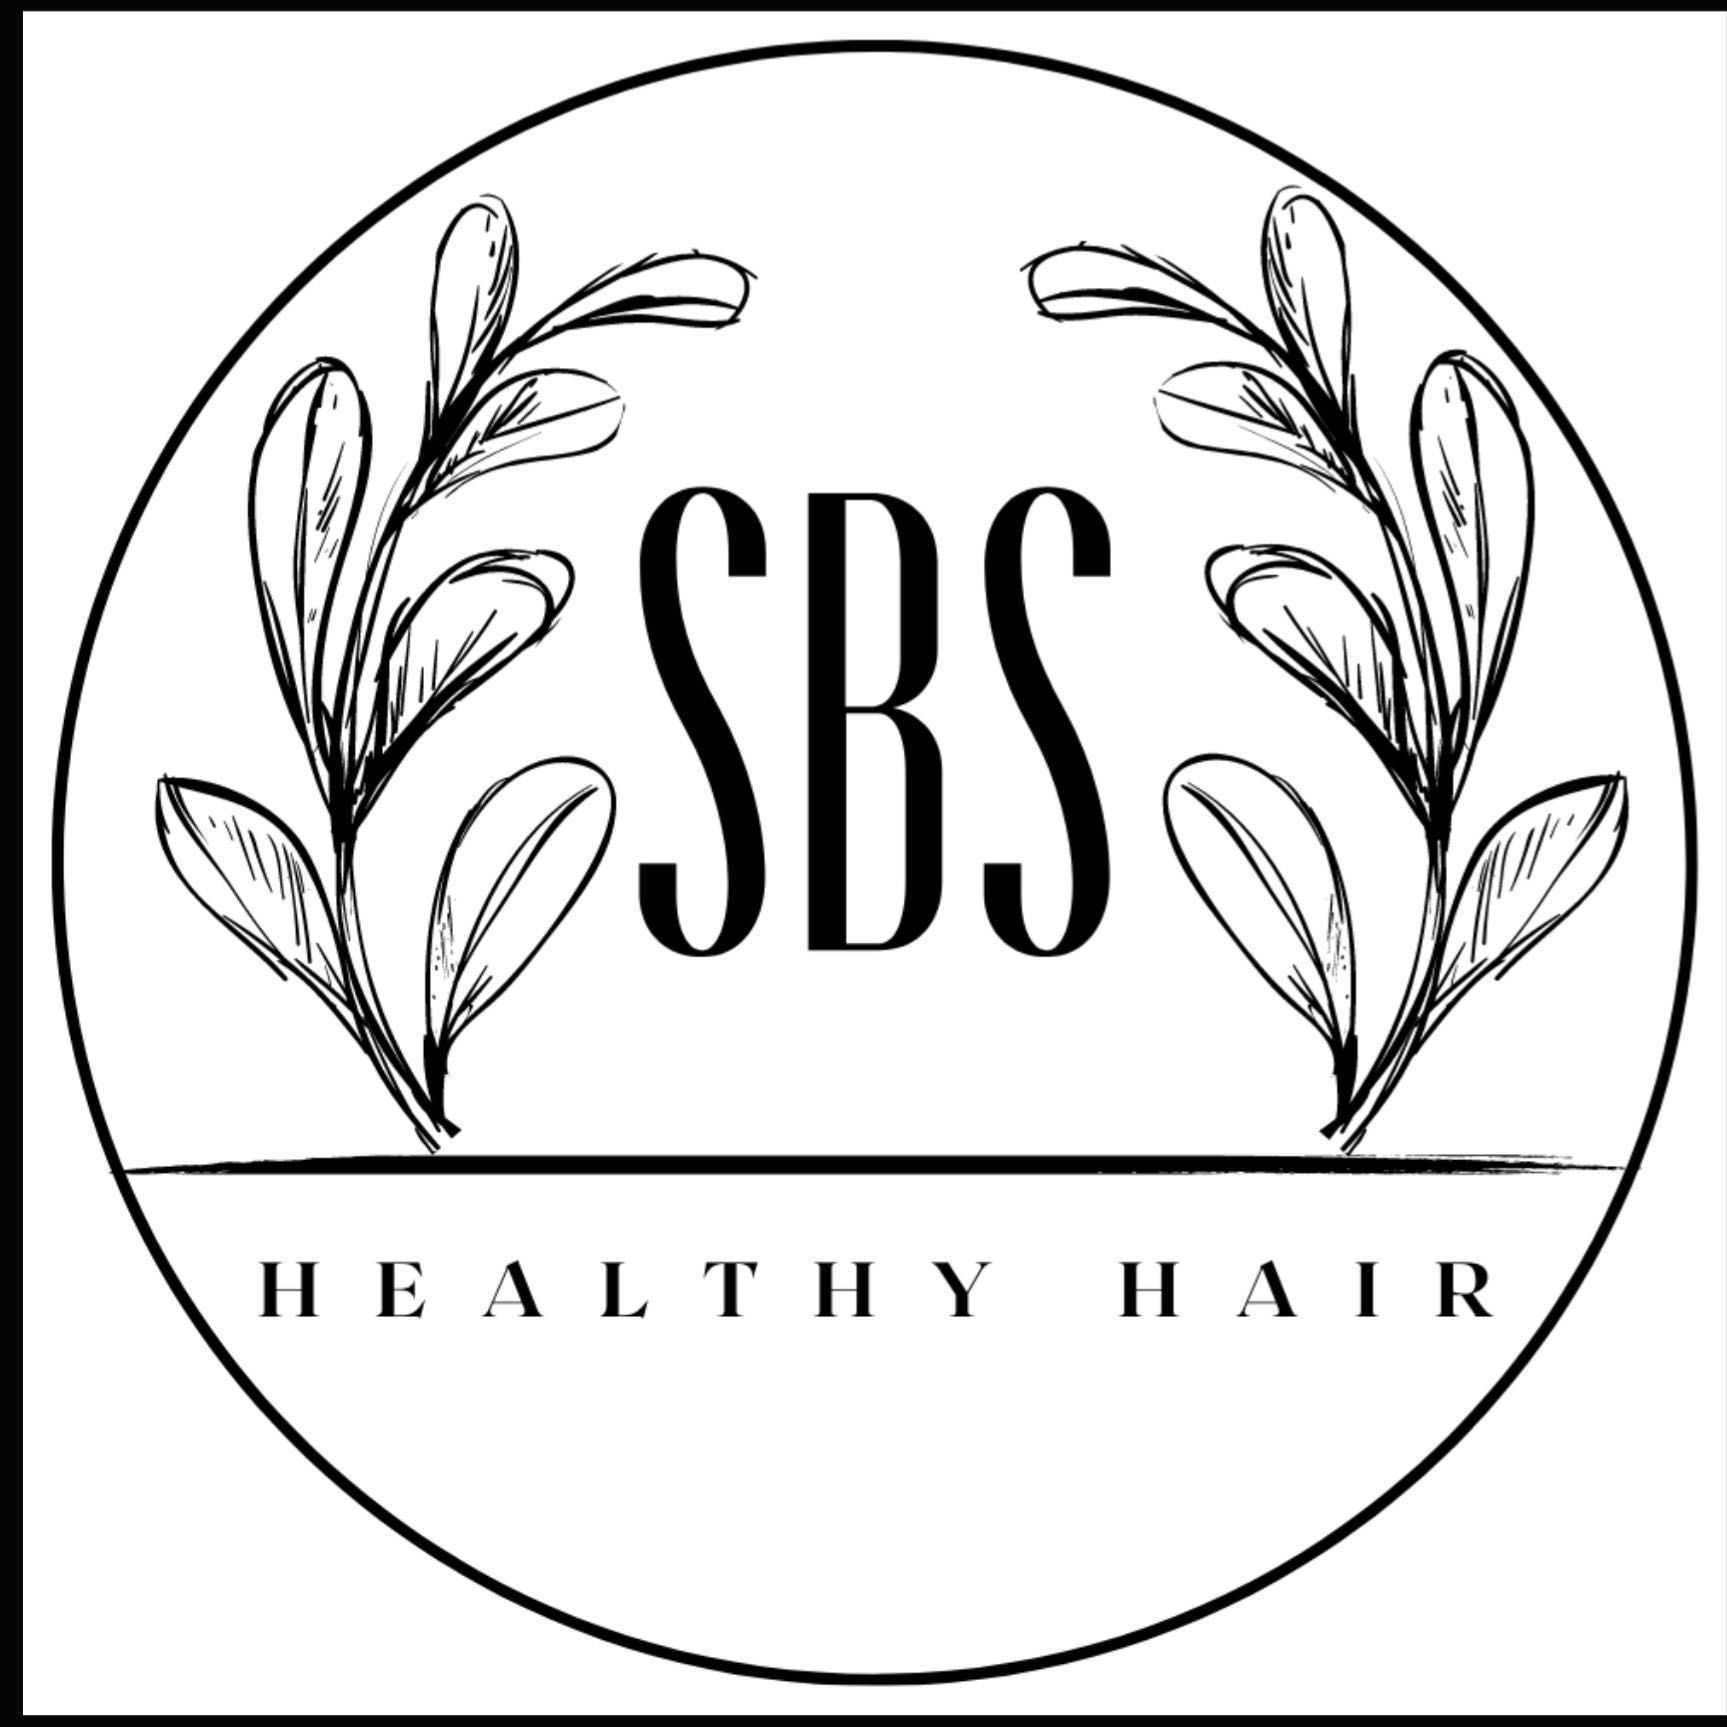 SBS HEALTHY HAIR, 3005 N BROADWAY AVE, Chicago, 60657